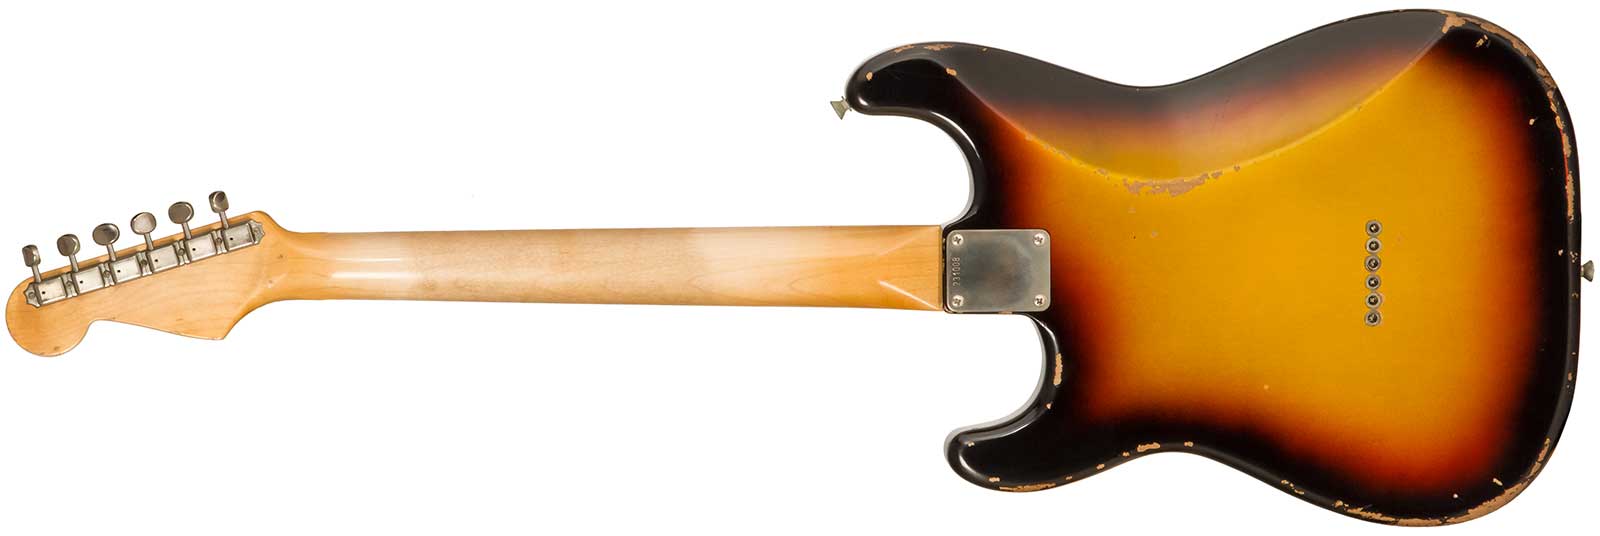 Rebelrelic S-series 1961 Hardtail 3s Ht Rw #231008 - 3-tone Sunburst - E-Gitarre in Str-Form - Variation 1